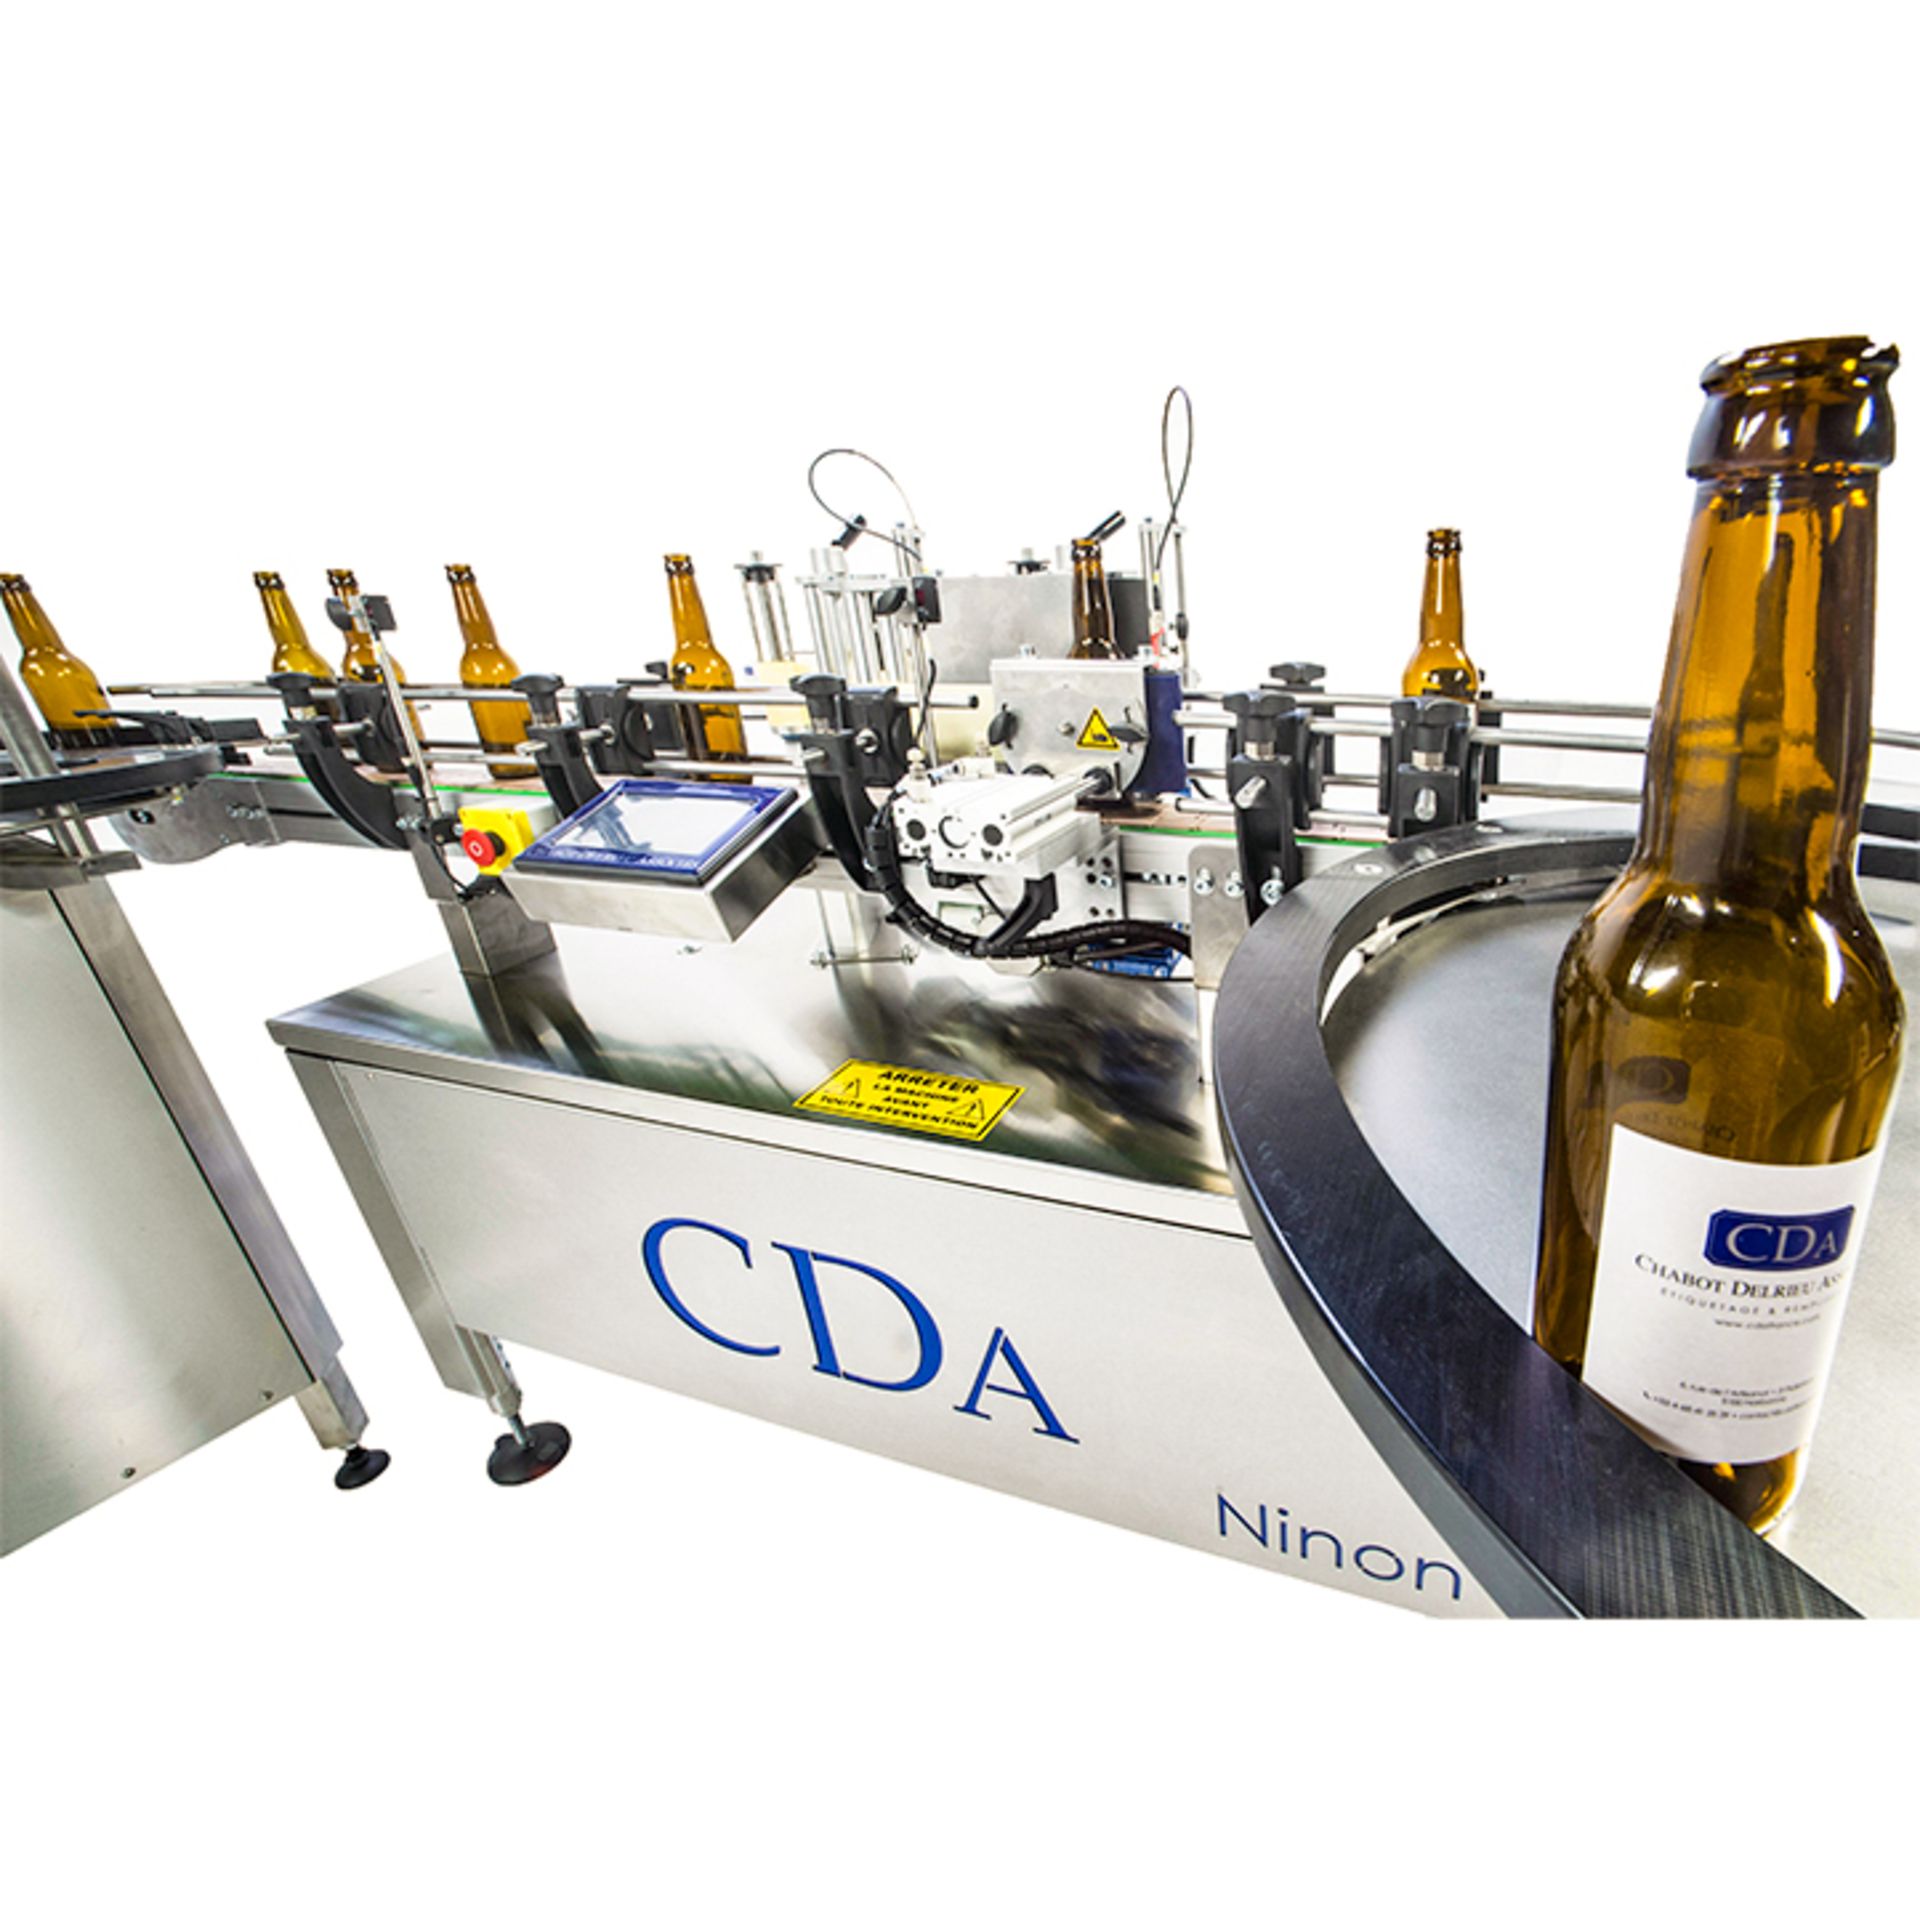 NEW NEVER INSTALLED 2020 CDA Pressure-Sensitive Linear Labeler Model Ninon 2500. Rigging Fee: $900 - Image 2 of 5